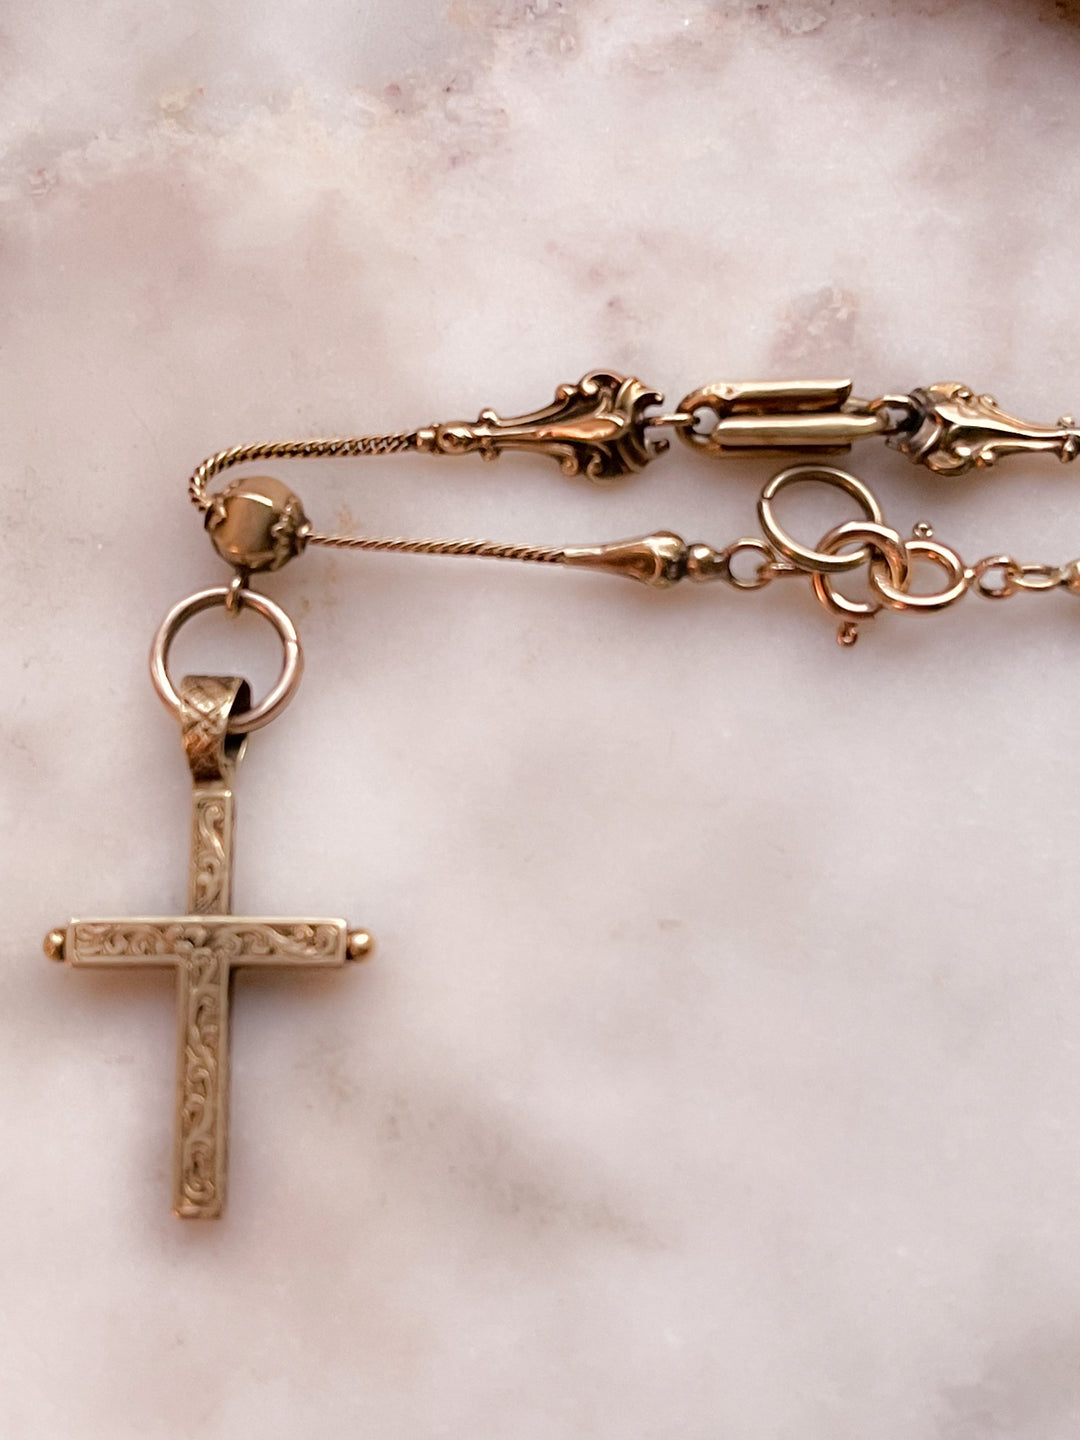 Stunning Cross Albertina with Embellished Chain